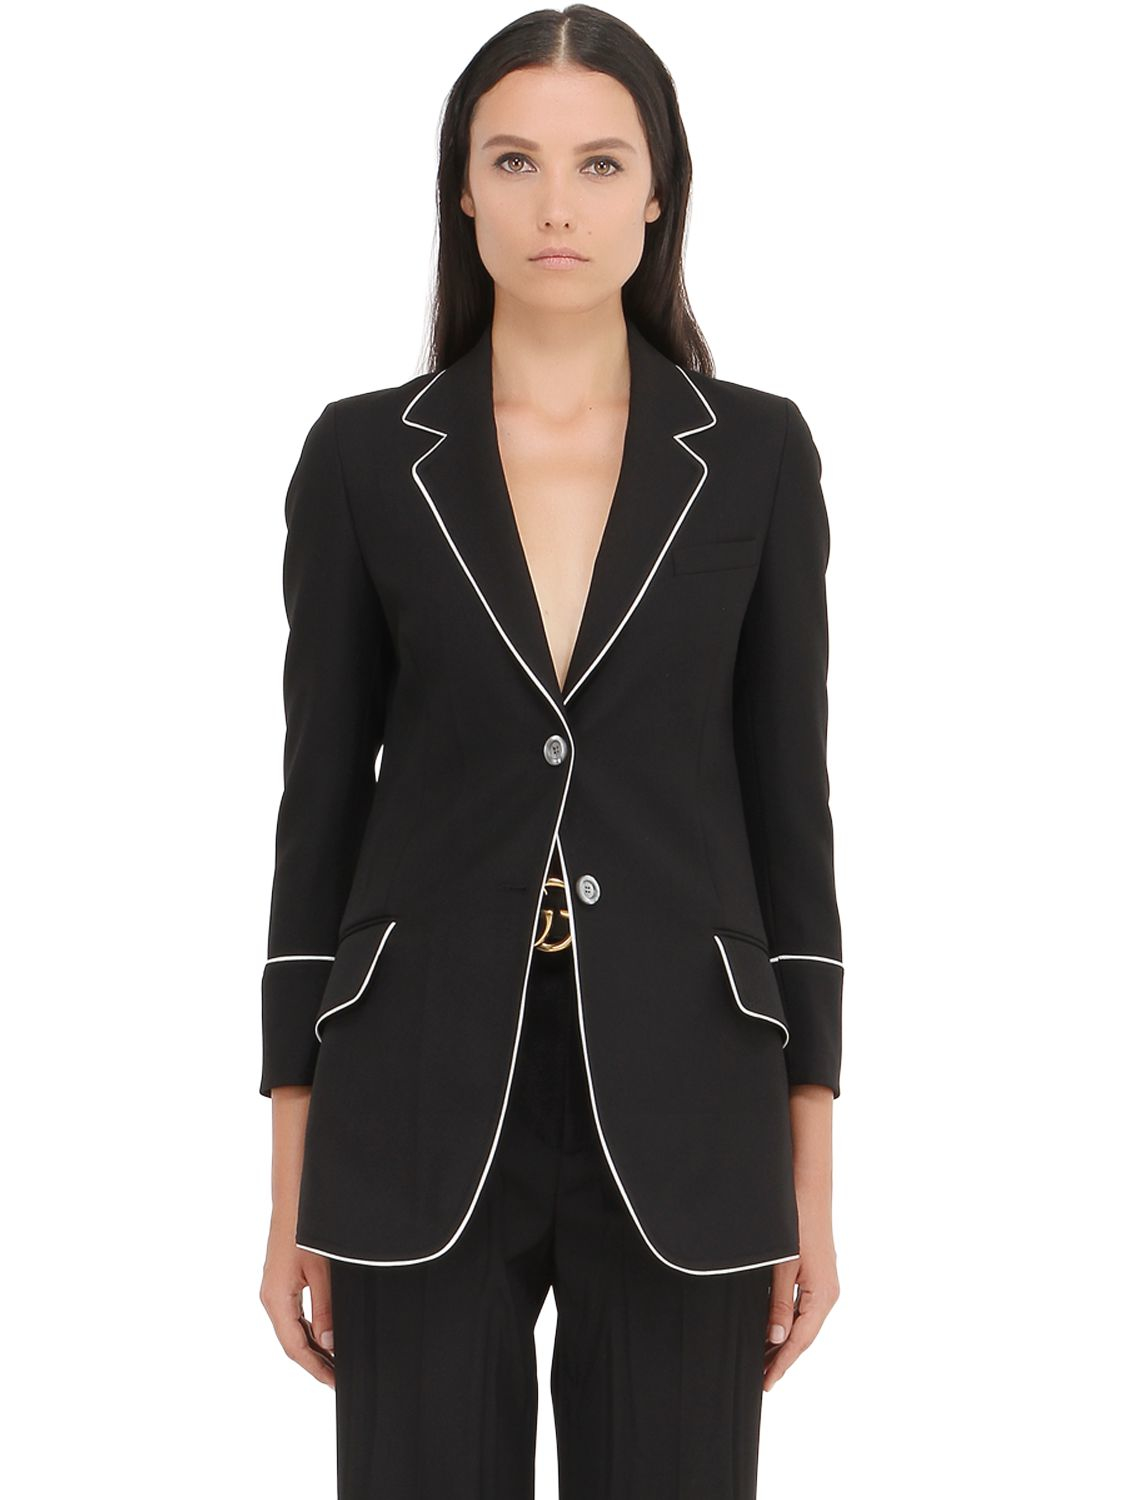 Gucci Wool Twill Pajama Style Jacket in Black | Lyst